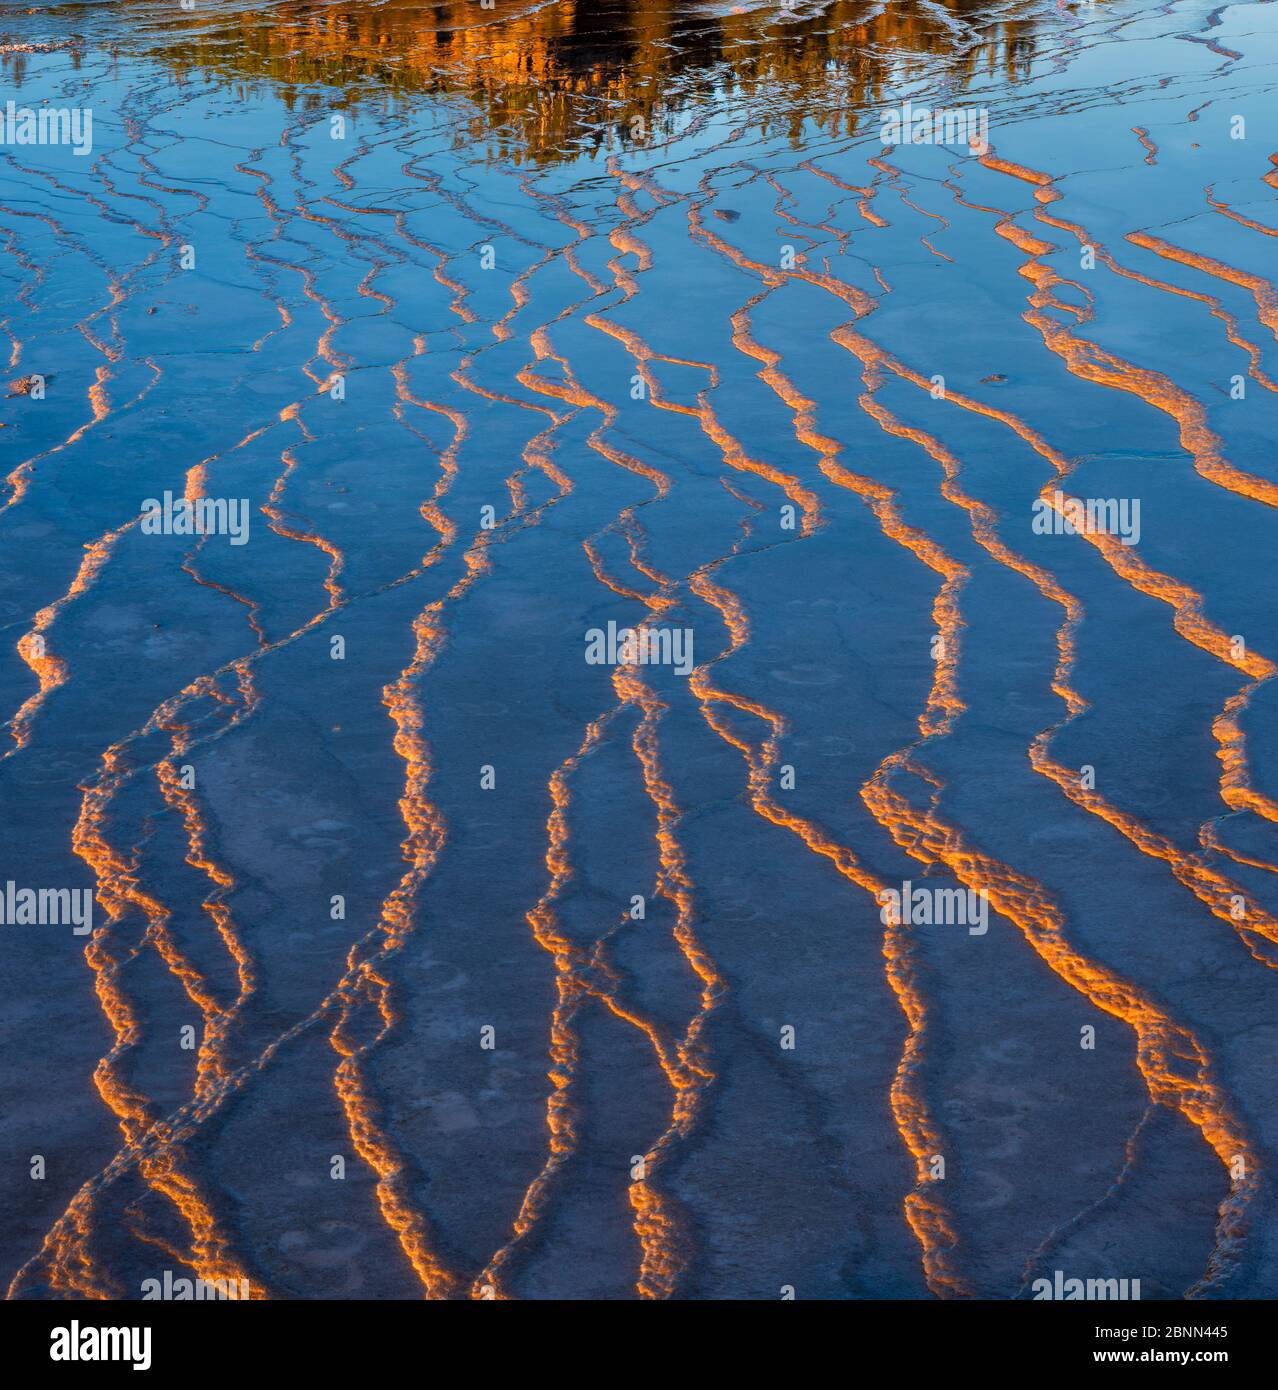 Muster in den Bakterienmatten im Nachmittagslicht. Grand Prismatic Spring, Middle Geyser Basin, Yellowstone National Park, Wyoming, USA. Stockfoto